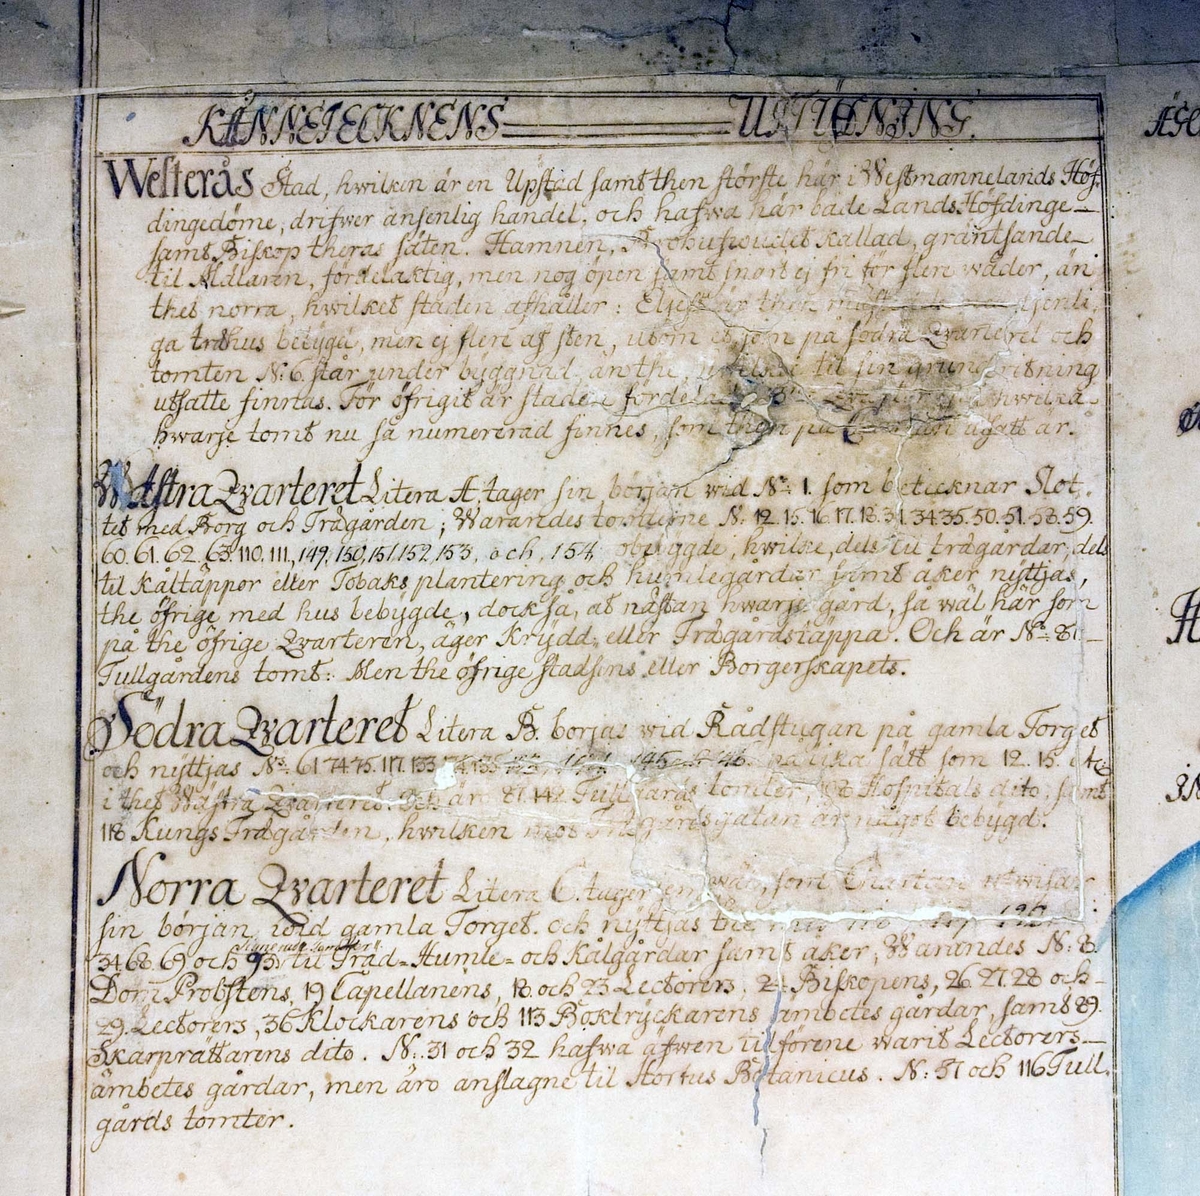 Charta öfver Westerås stad uti Westmanneland författad 1751 af G G Holsten. Bildfil KR00167a-b. Rullad.